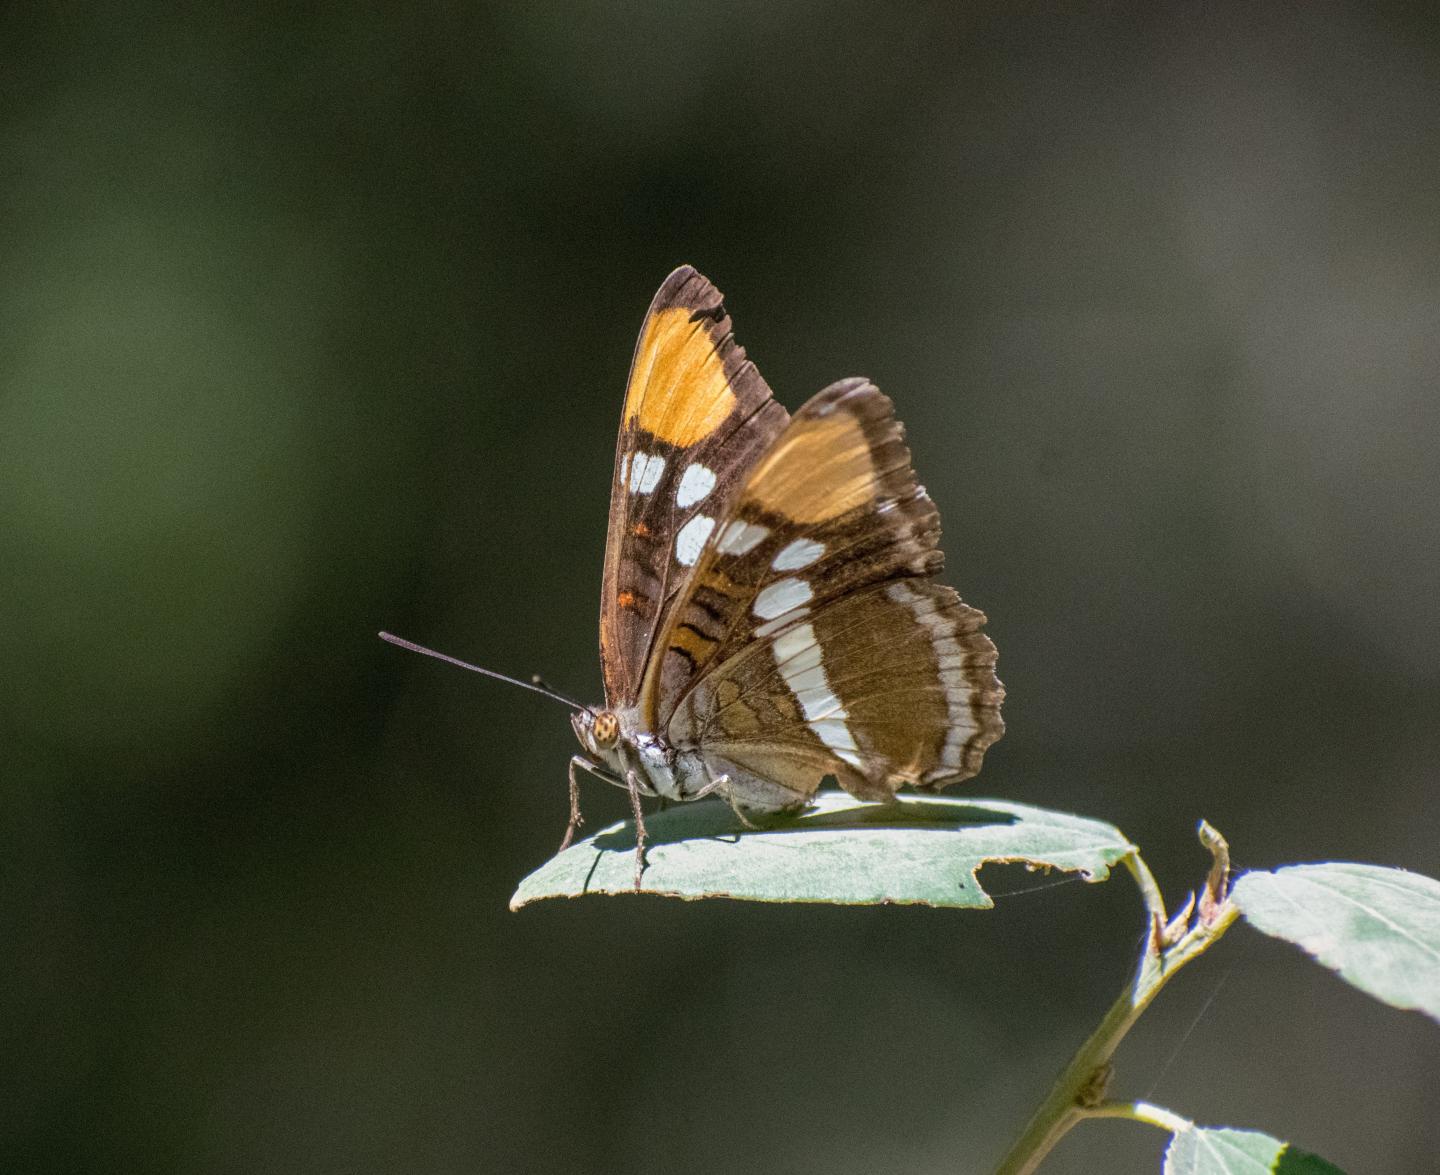 250 butterfly species studied